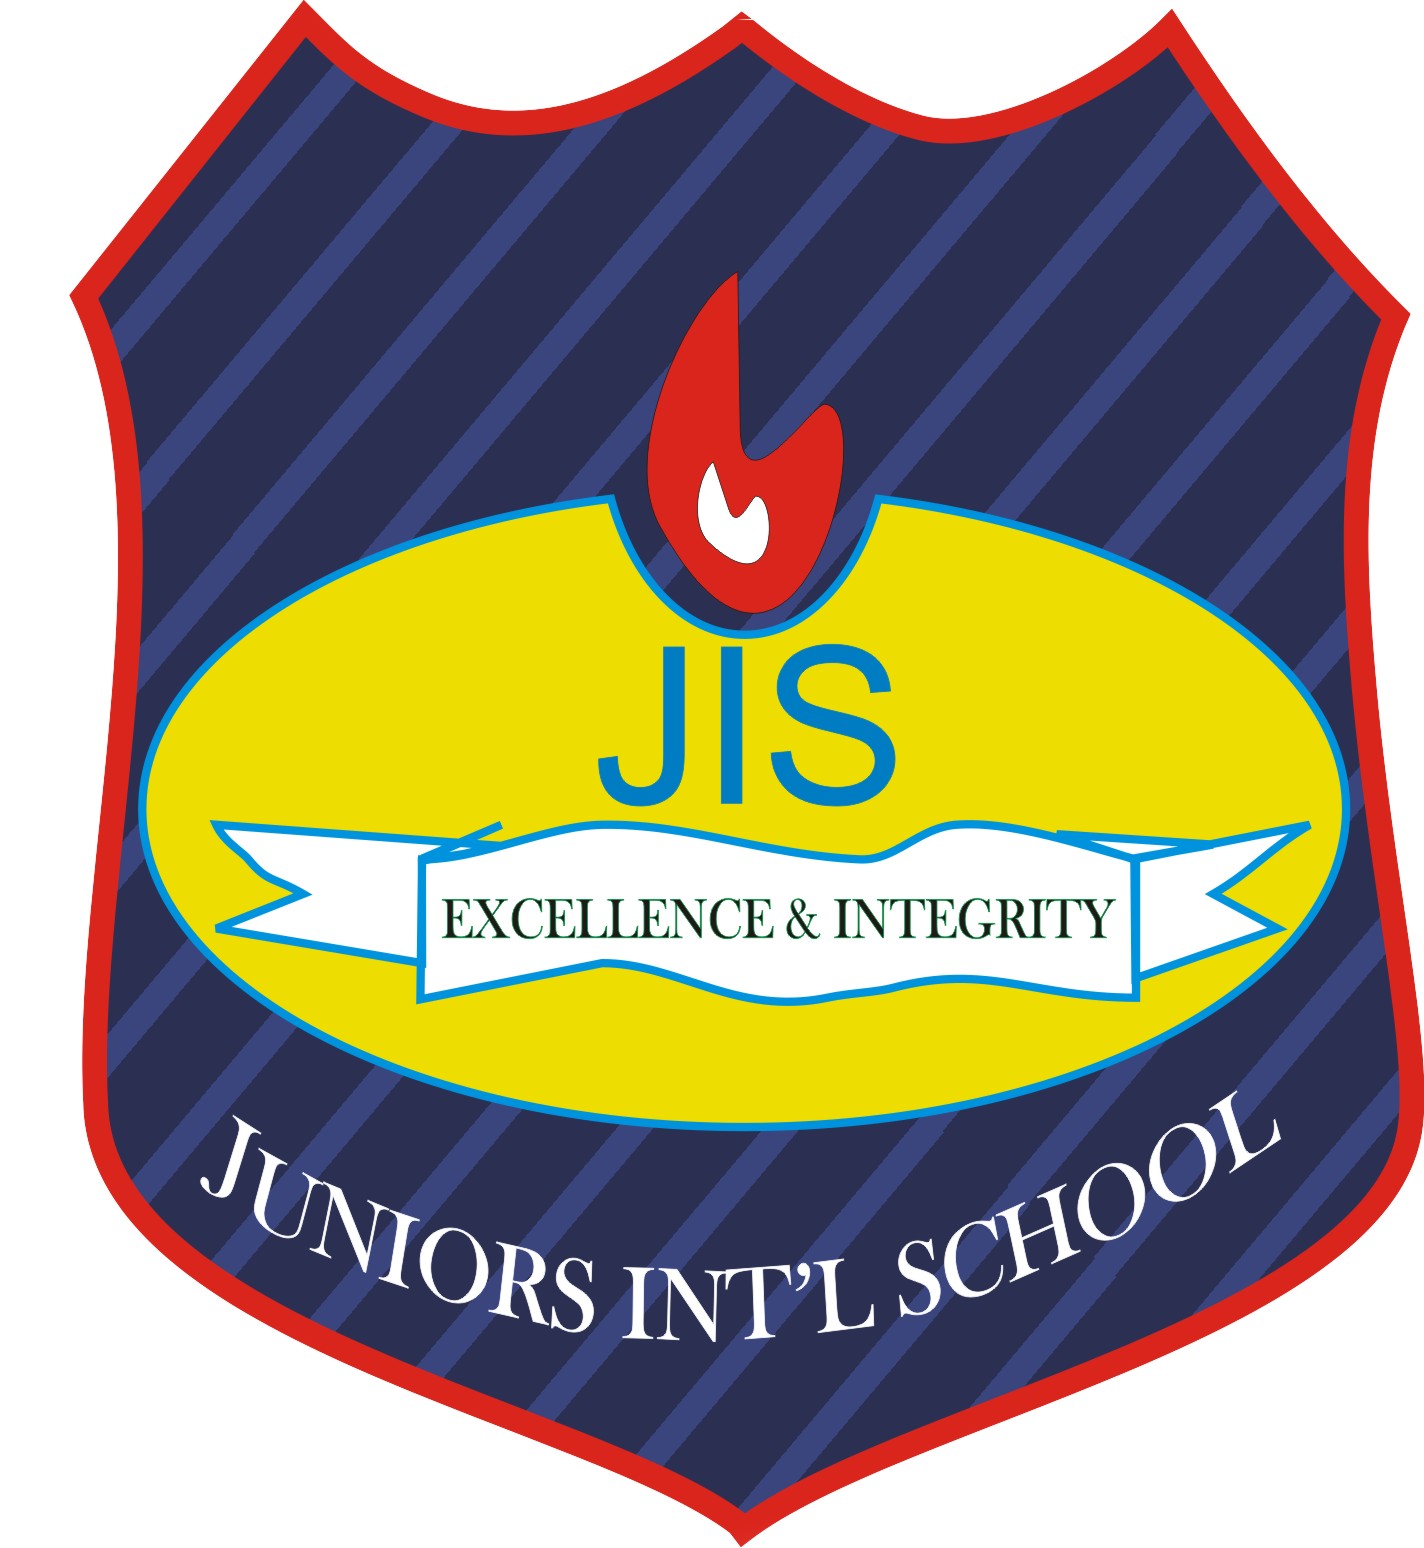 JUNIORS INTERNATIONAL SCHOOL - JIS